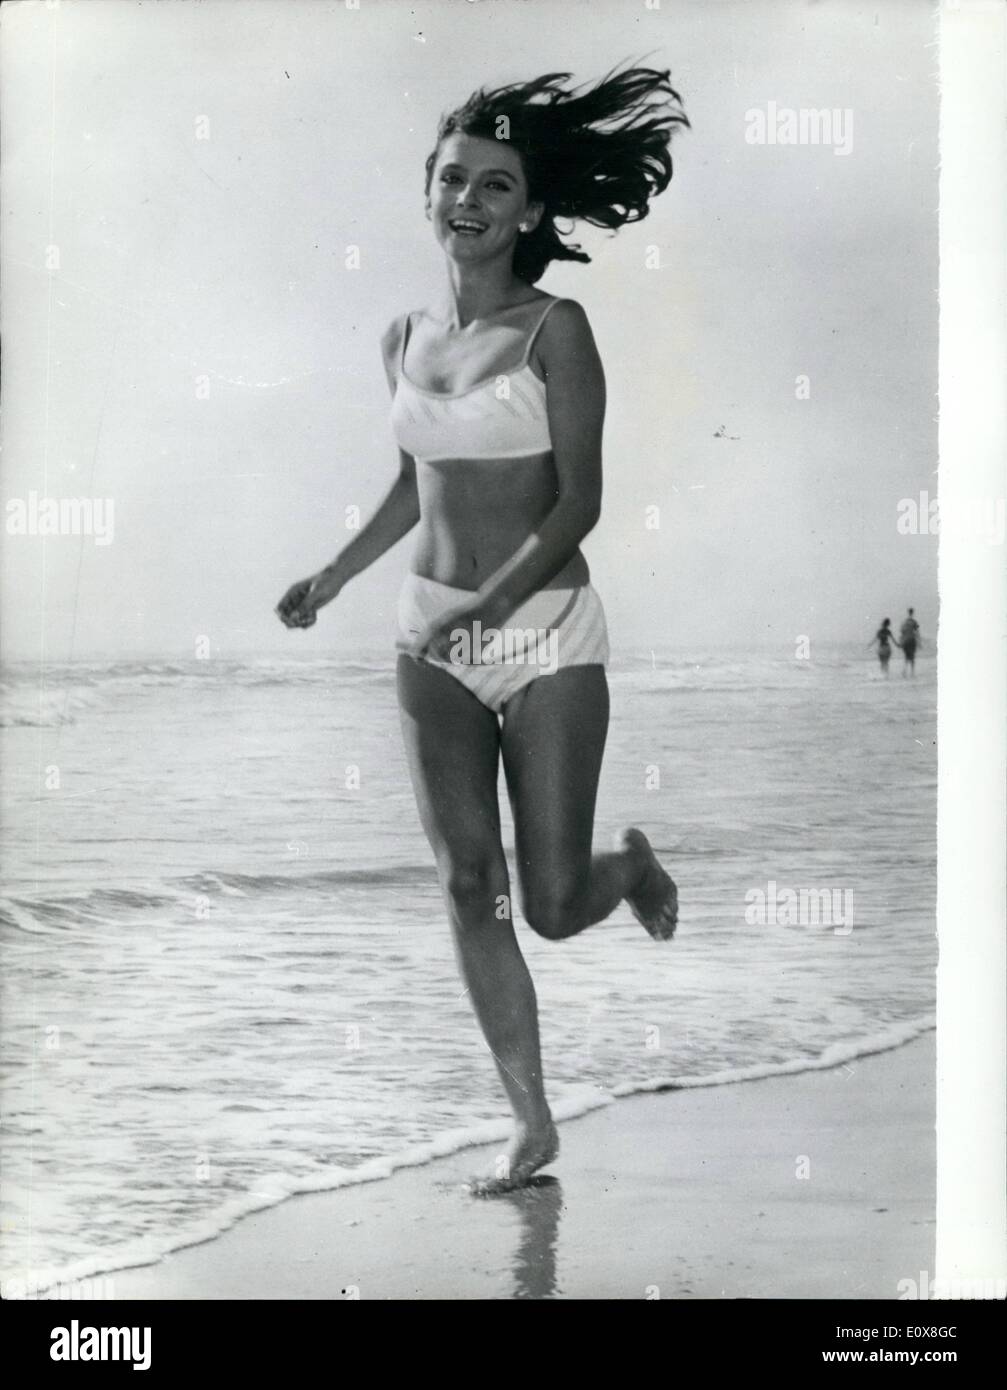 Teen in Bikini und Hot Pants macht Urlaub an Strand und Meer - Vintage  Flare Lens Stock Photo